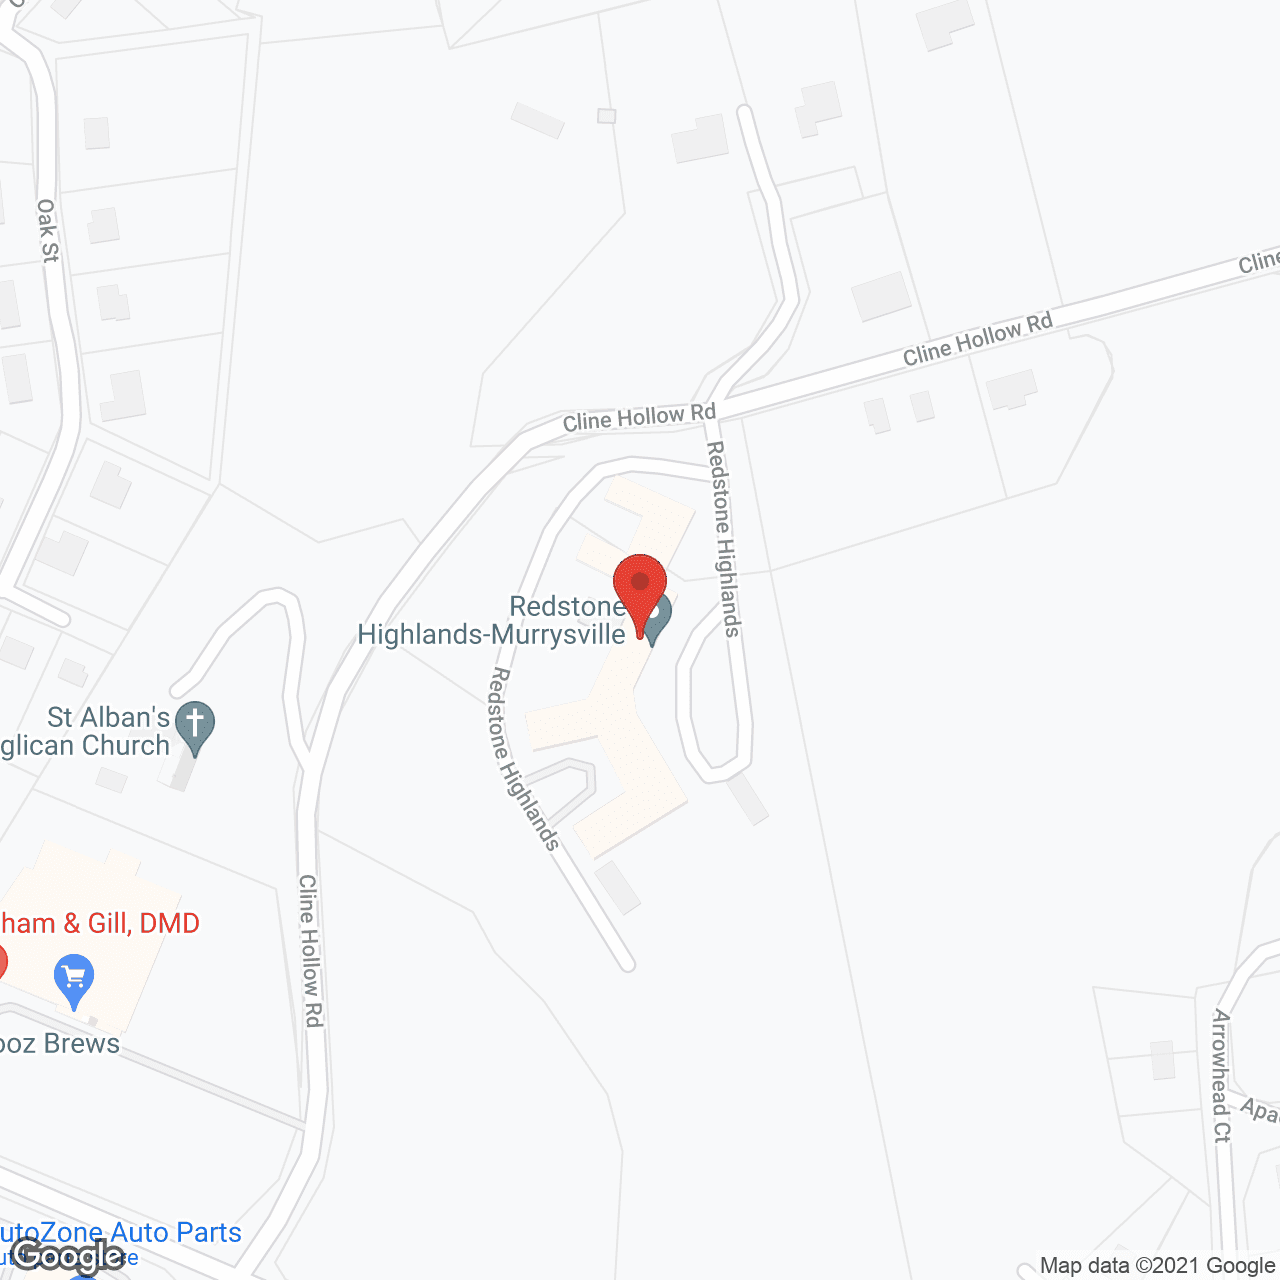 Redstone Highlands-Murrysville in google map